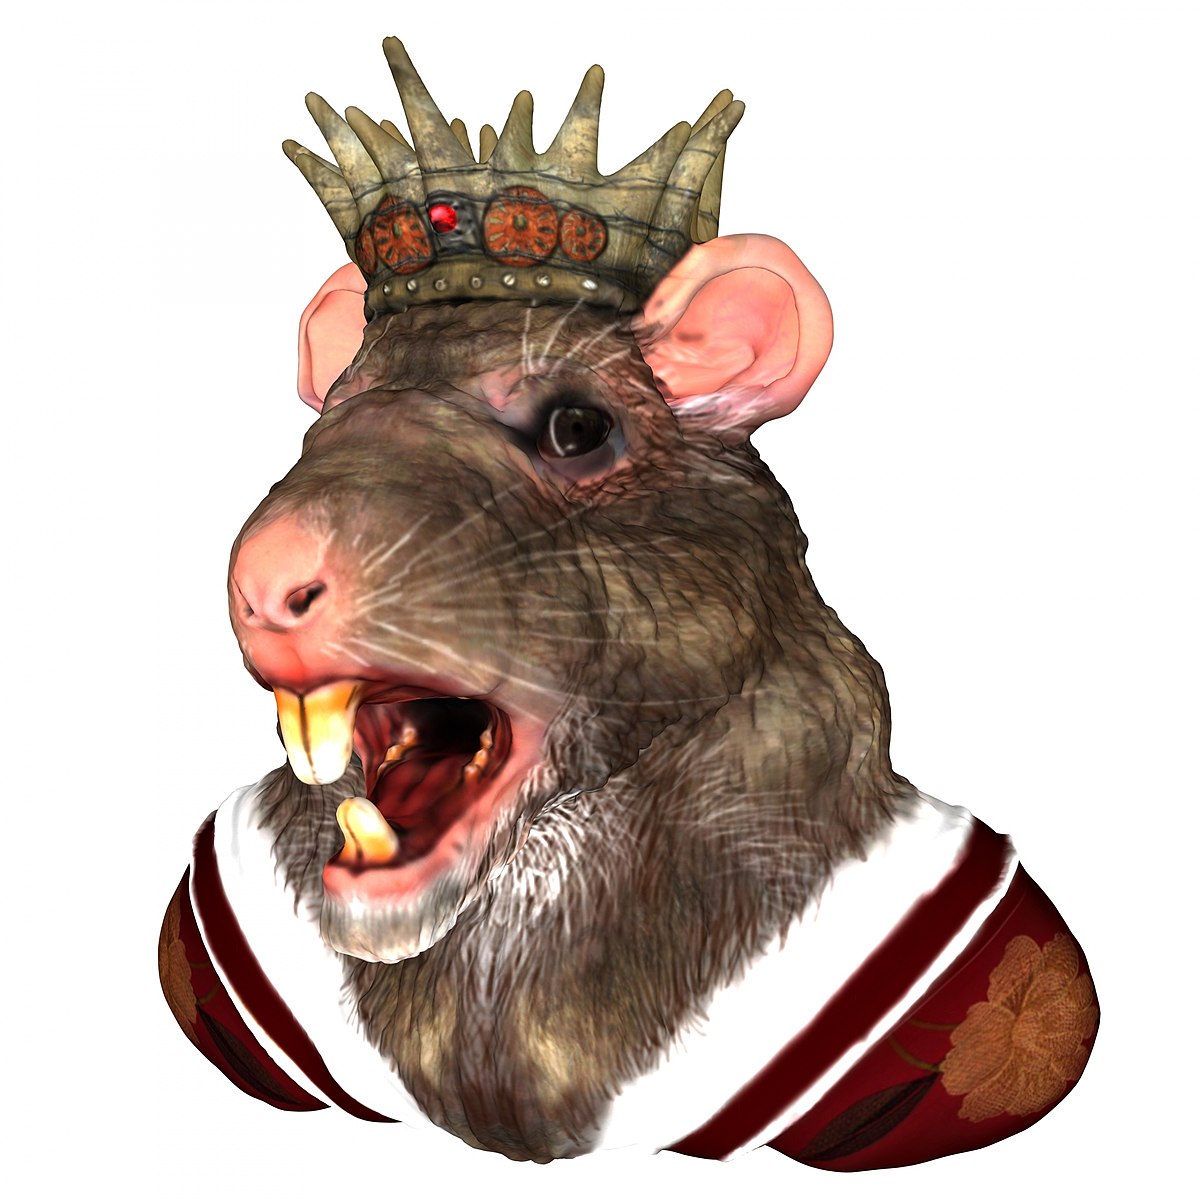 File:King-rat.jpg - Wikipedia